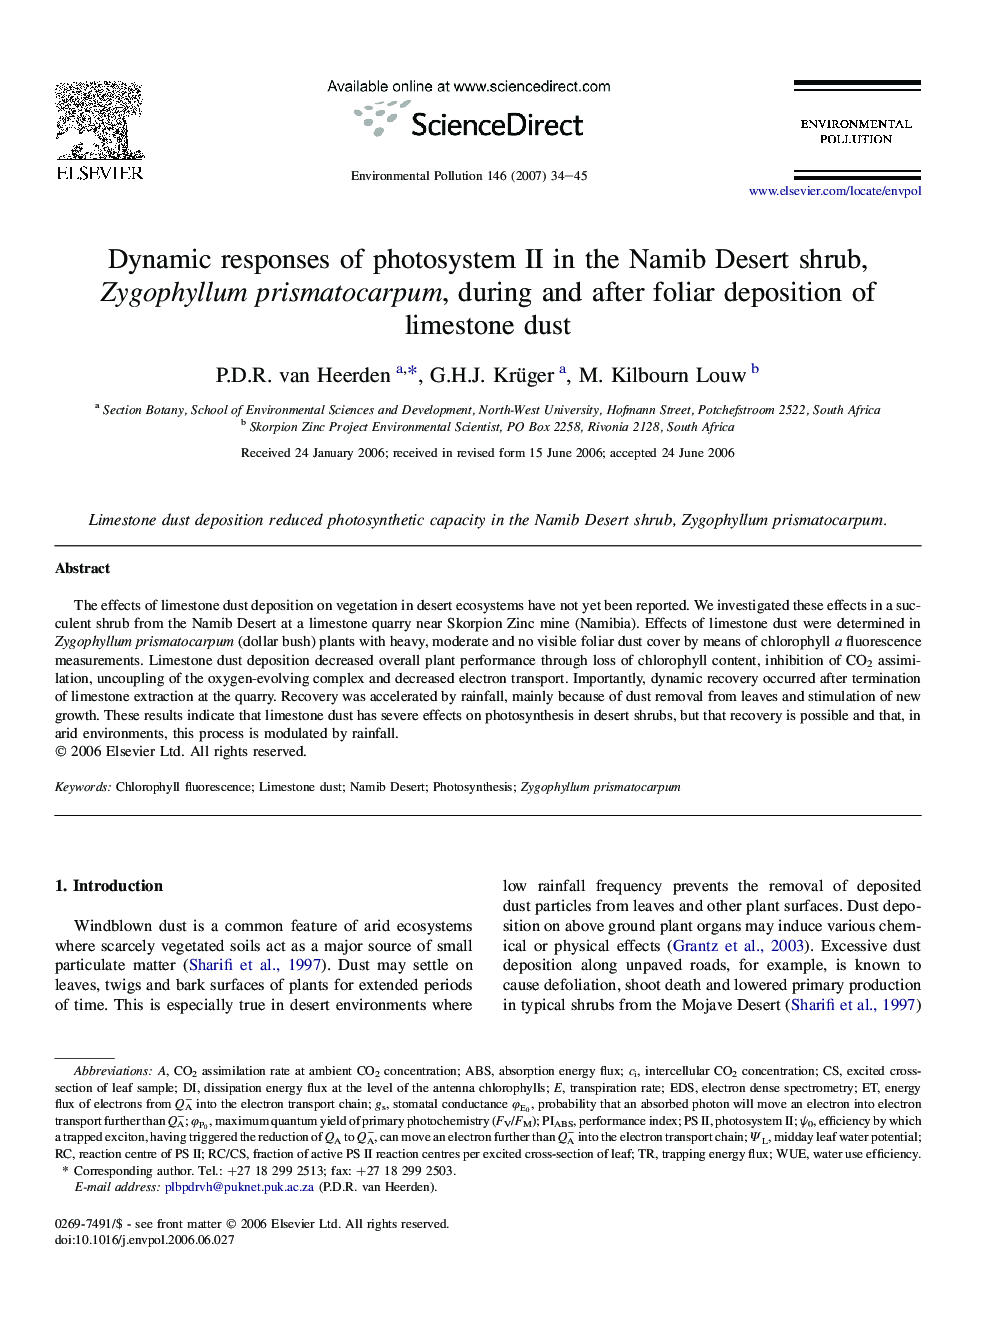 Dynamic responses of photosystem II in the Namib Desert shrub, Zygophyllum prismatocarpum, during and after foliar deposition of limestone dust